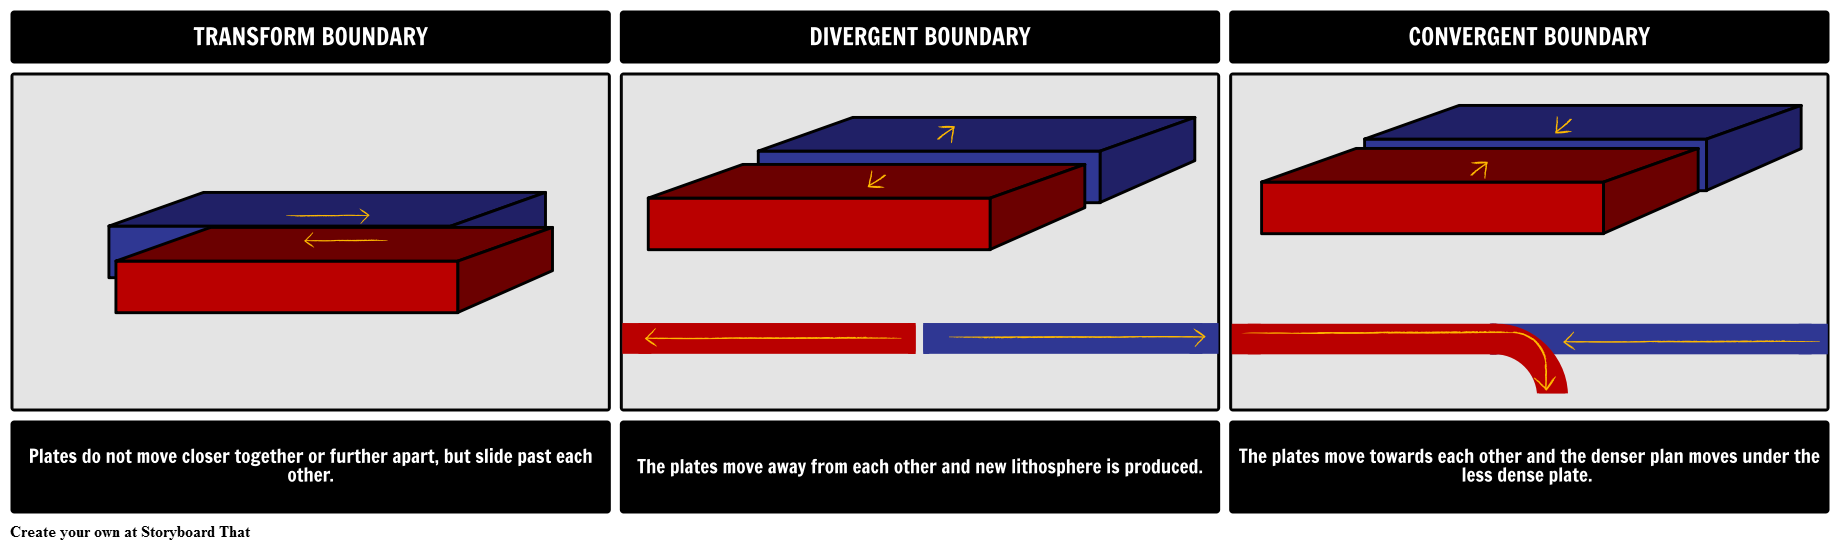 divergent plate boundaries animation